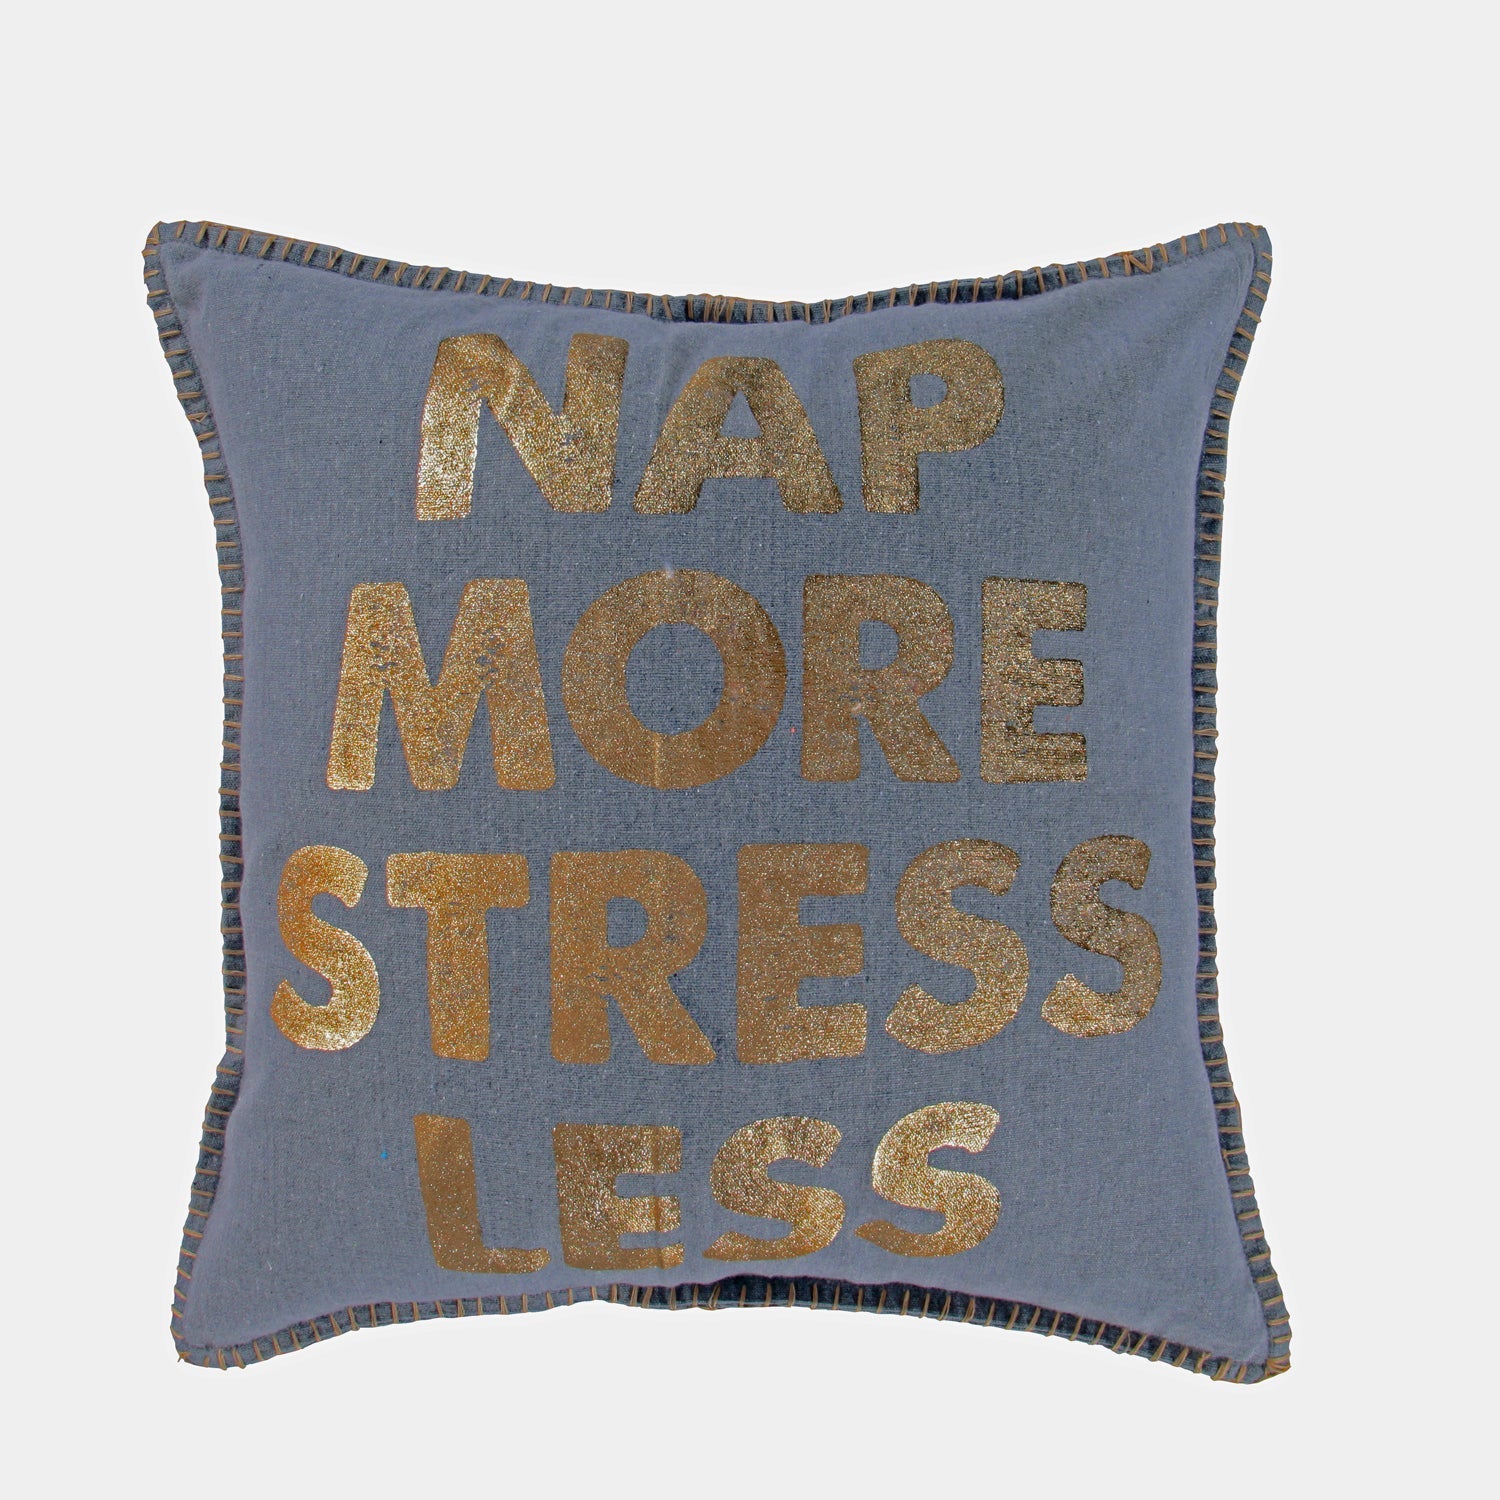 Nap More Stress Less Pillow